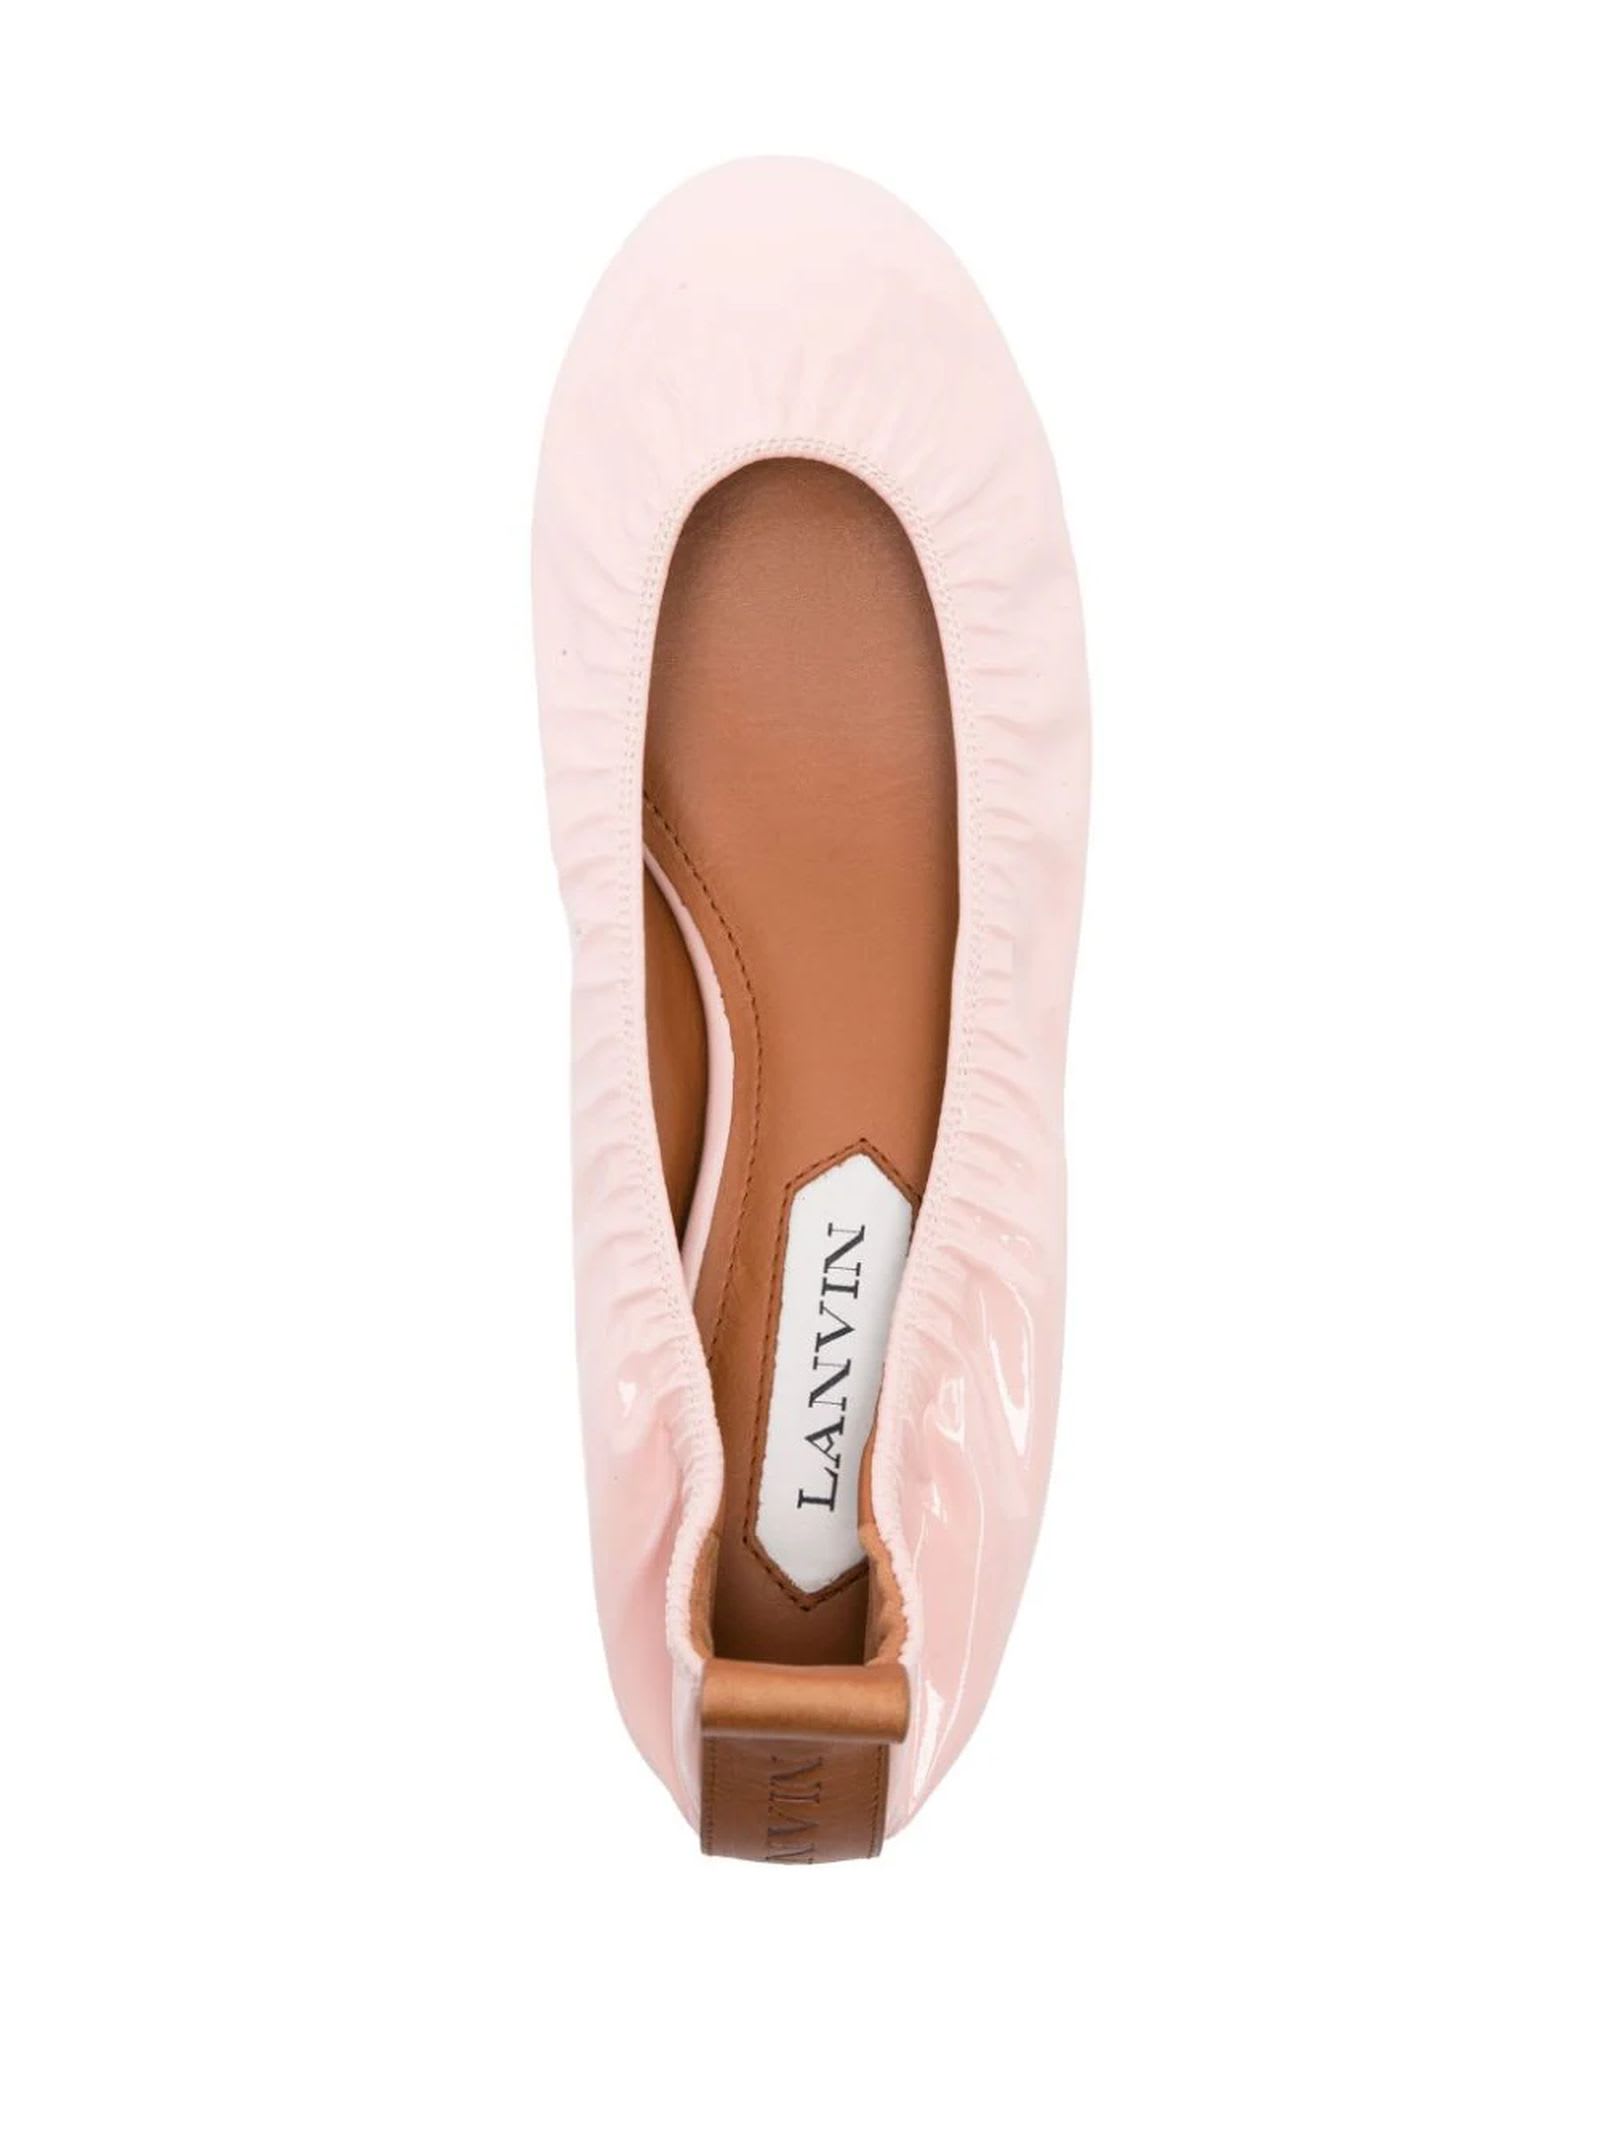 Shop Lanvin Pink Patent Leather Ballerina Shoes